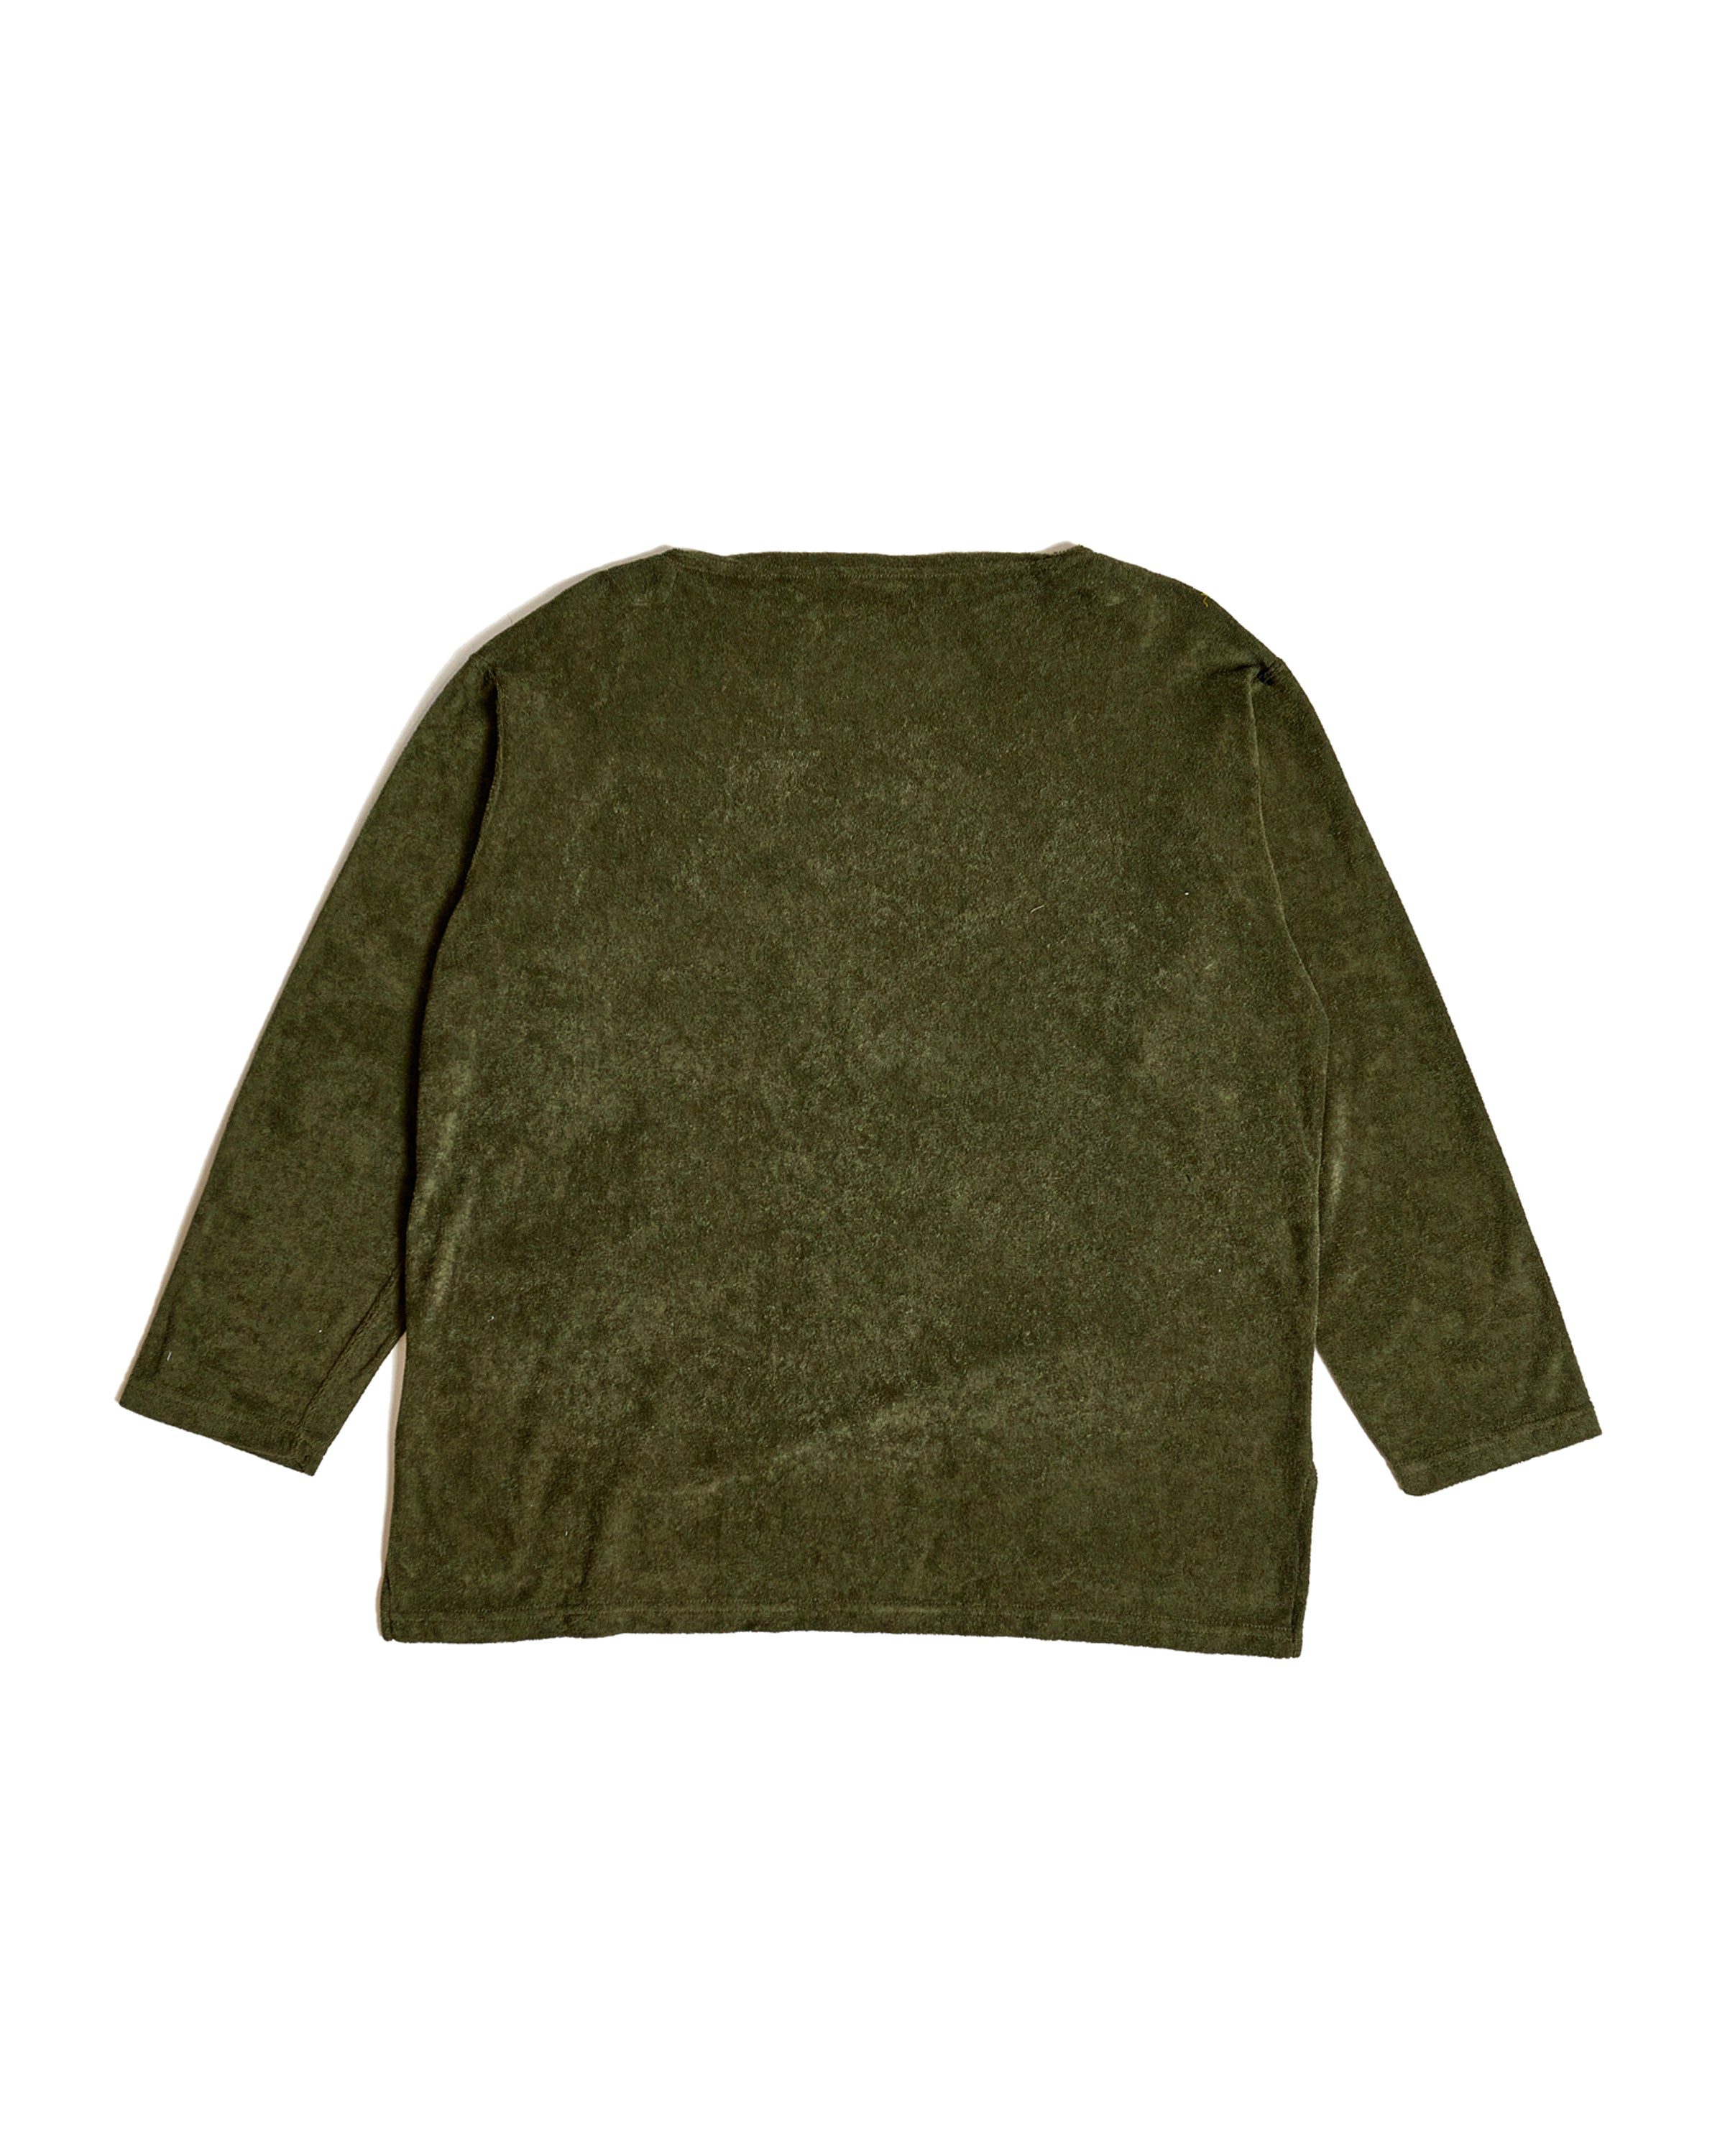 Engineered Garments Basque Shirt - Olive CP Velour